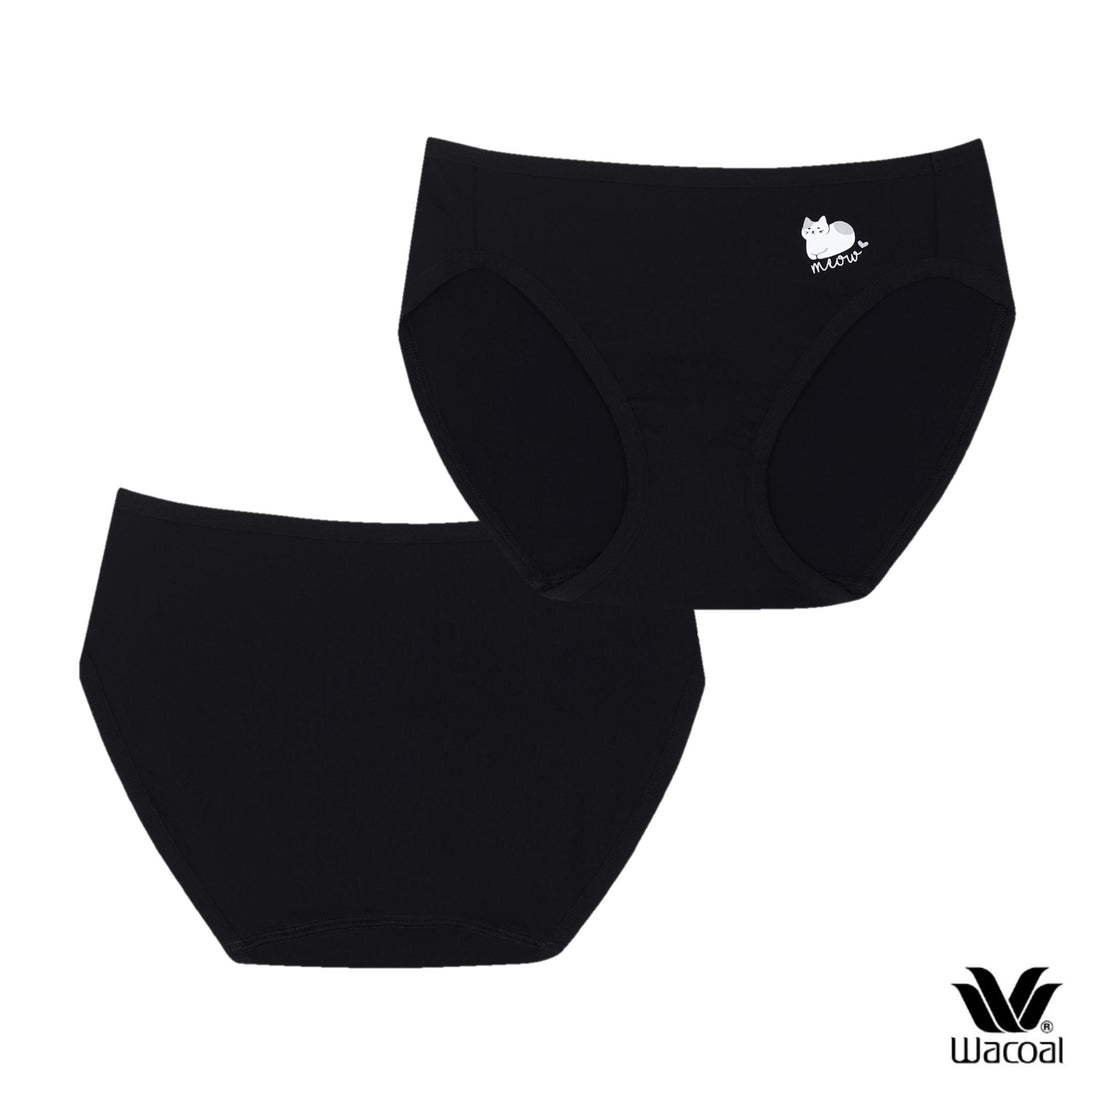 Wacoal Panty Fashion กางเกงในรูปแบบบิกินี 1 Set 3 ชิ้น รุ่น WU2C04 ( ซื้อ 1 Set แถม 1 Set)